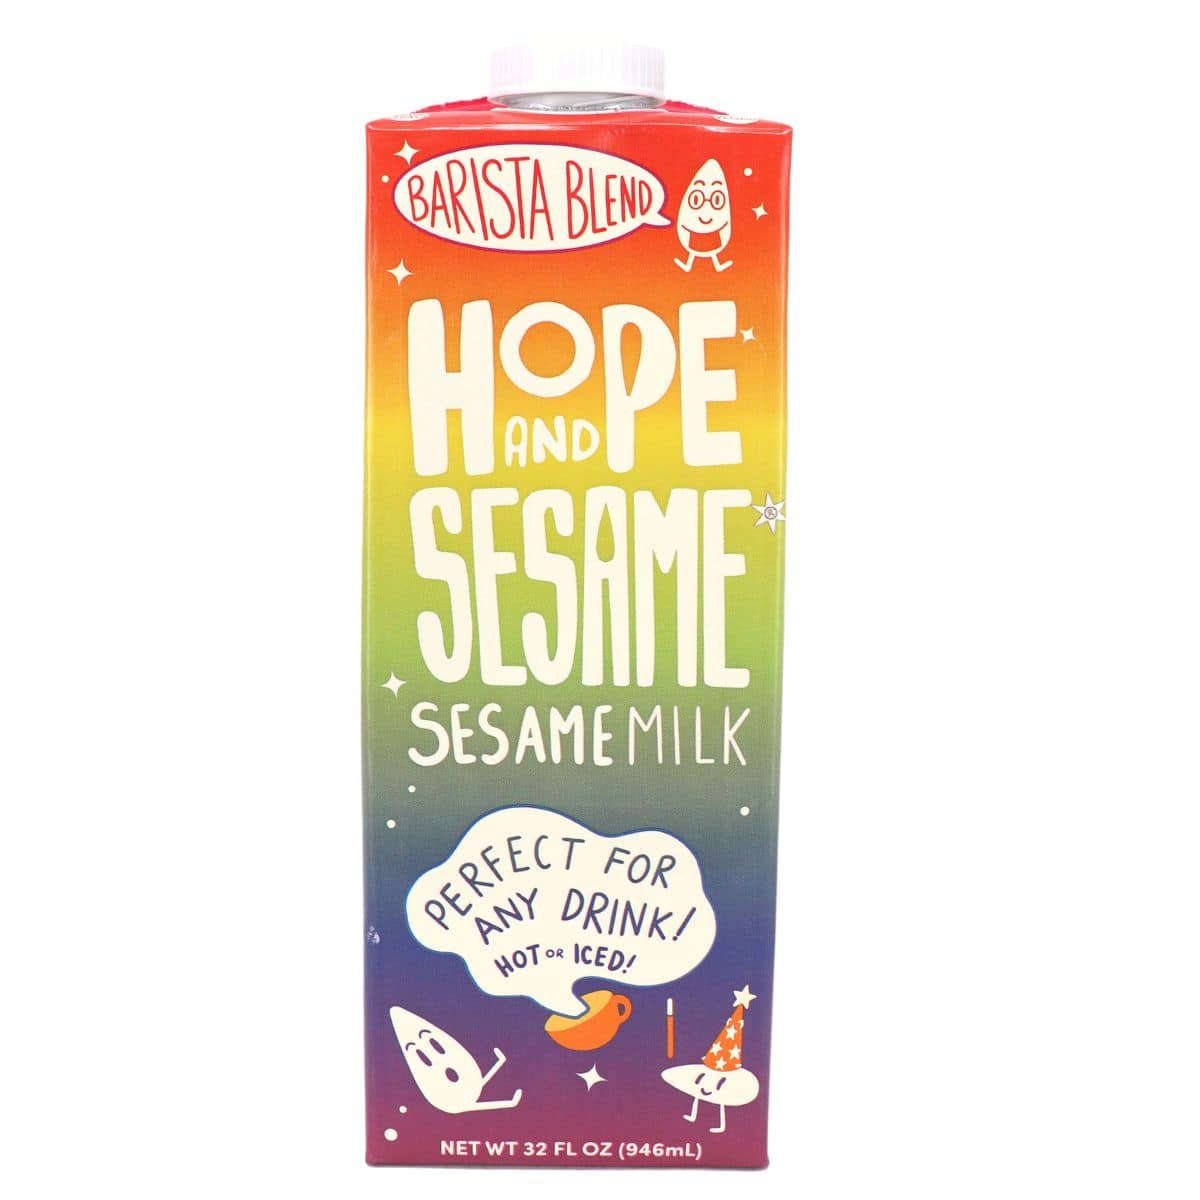 ✅ Hope And Sesame Gluten-Free Sesame Milk Barista Blend, 946ml